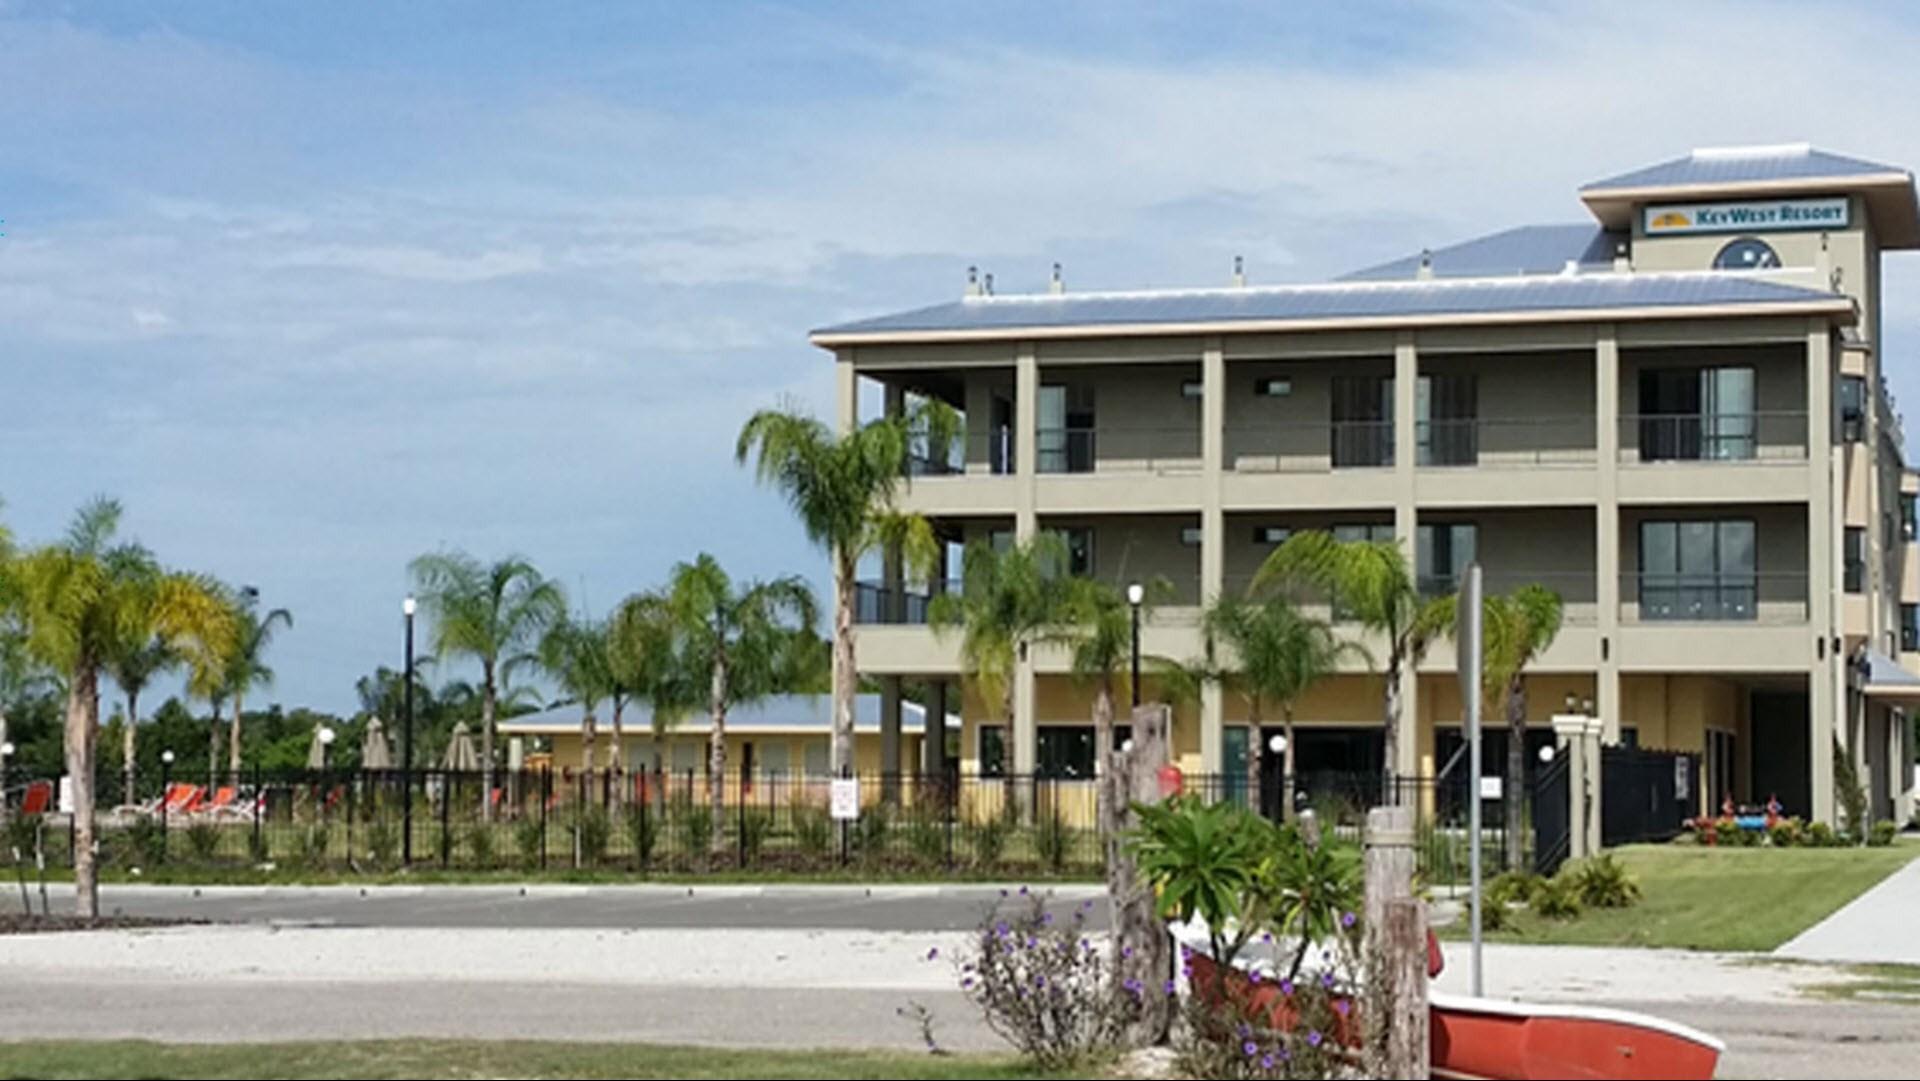 Key West Resort - Tavares in Tavares, FL